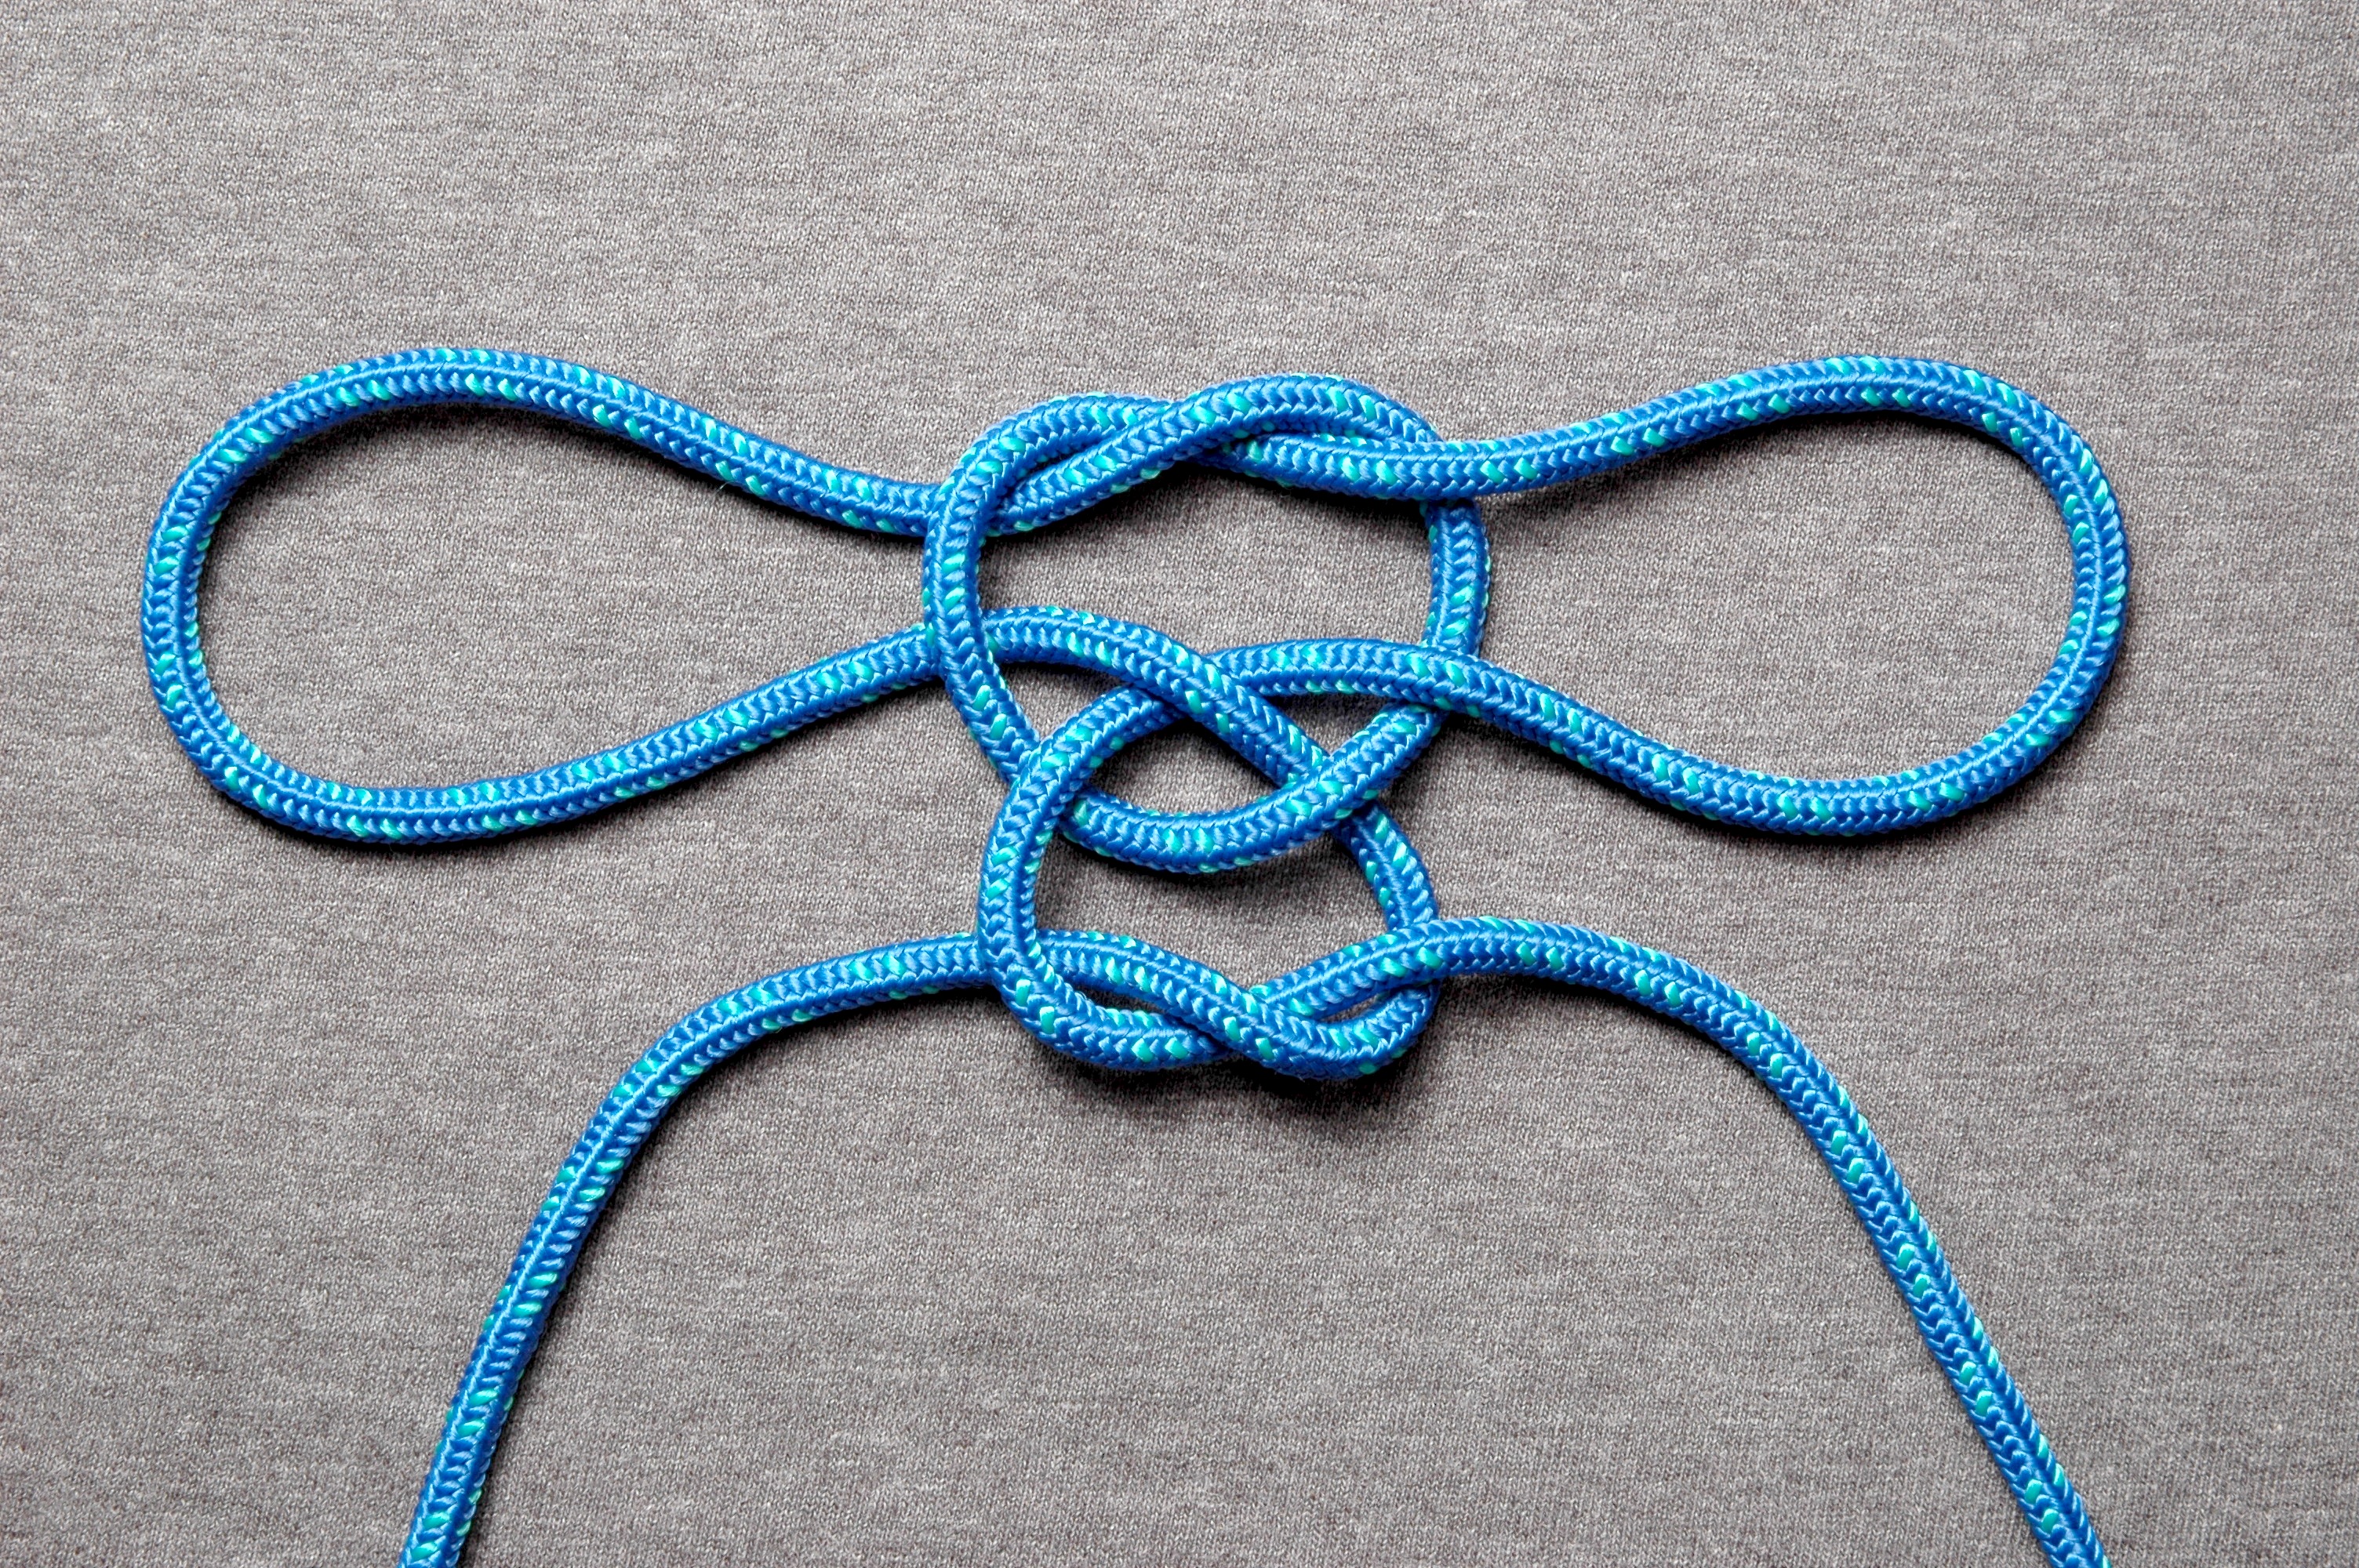 Handcuff-knot-ABOK-1140-Reef-finish